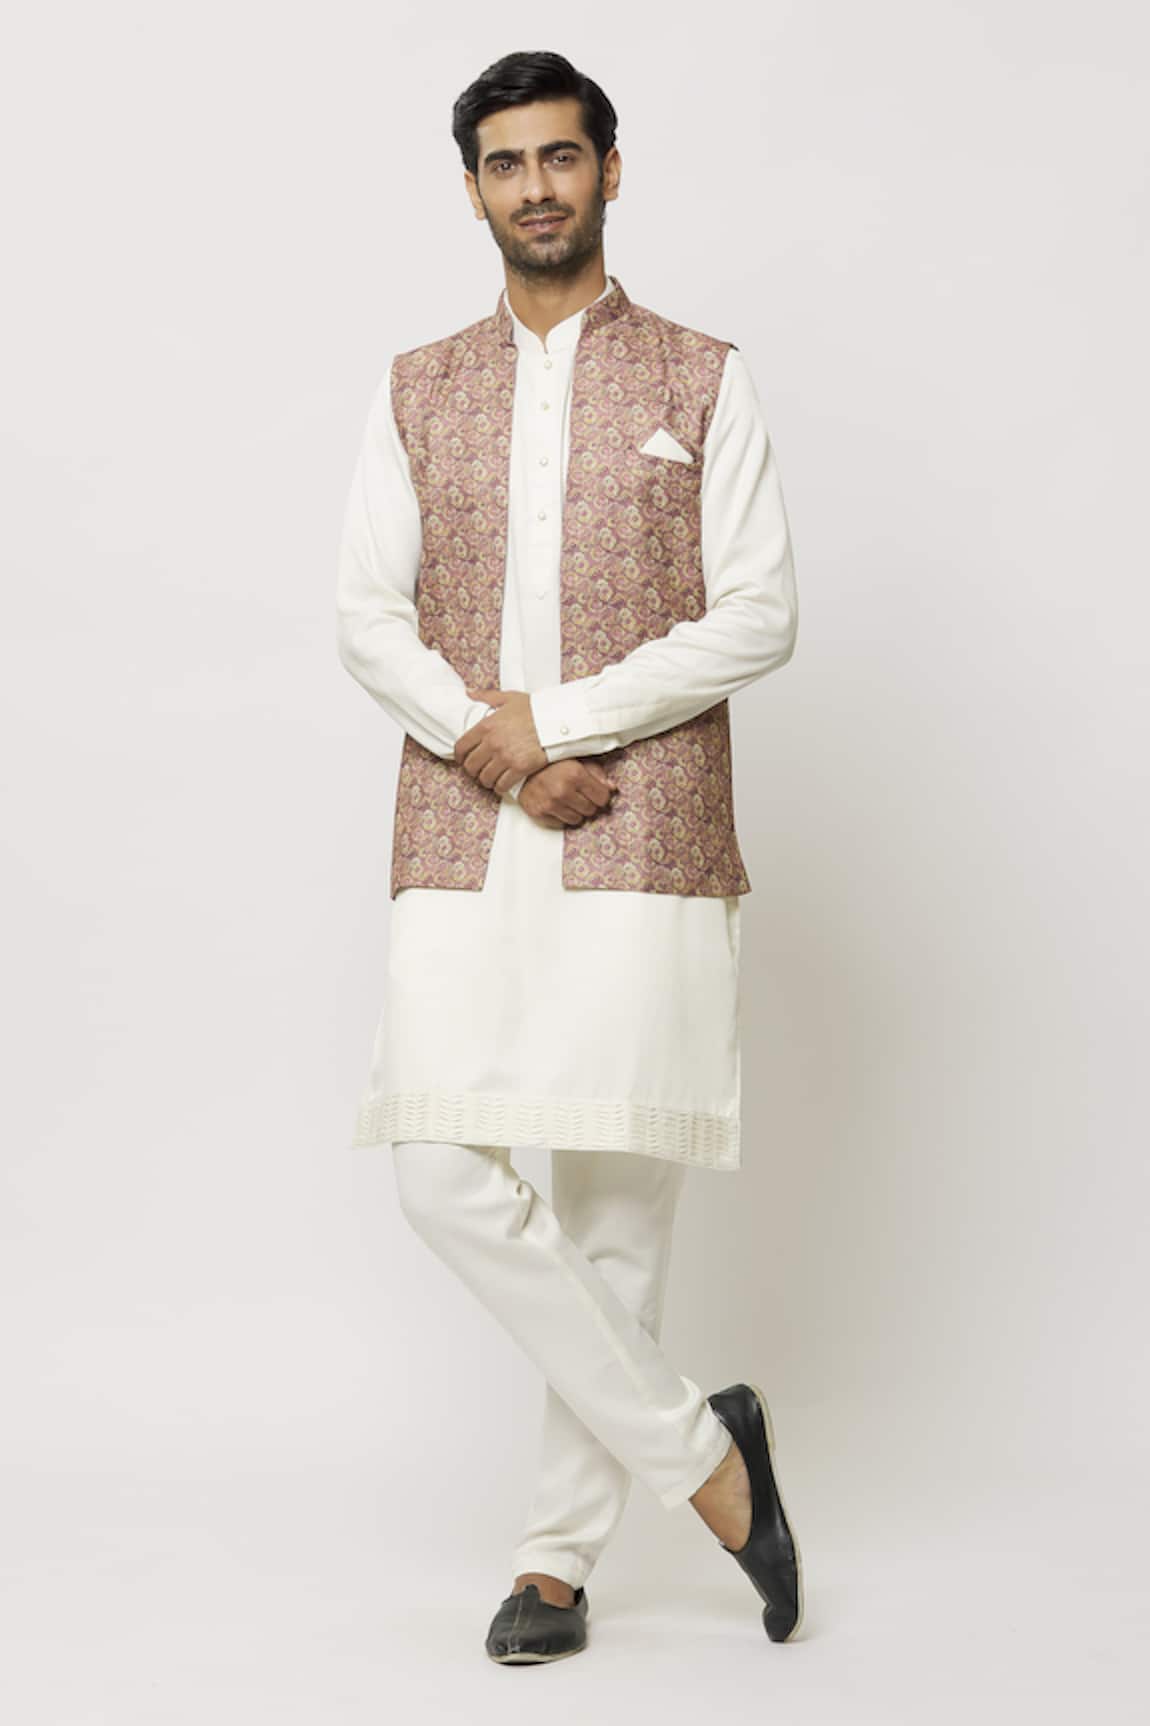 Aryavir Malhotra Floral Print Jacket Aligadi Pant Set